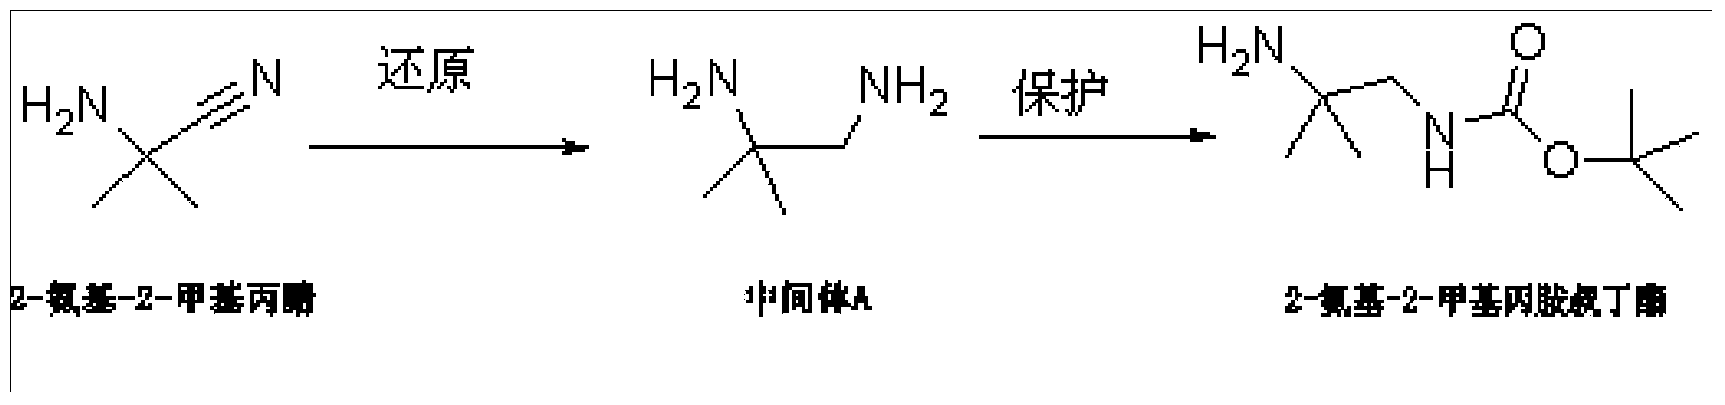 Synthesis method of anagliptin intermediate 2-amino-2-methylpropylamine tert-butyl ester